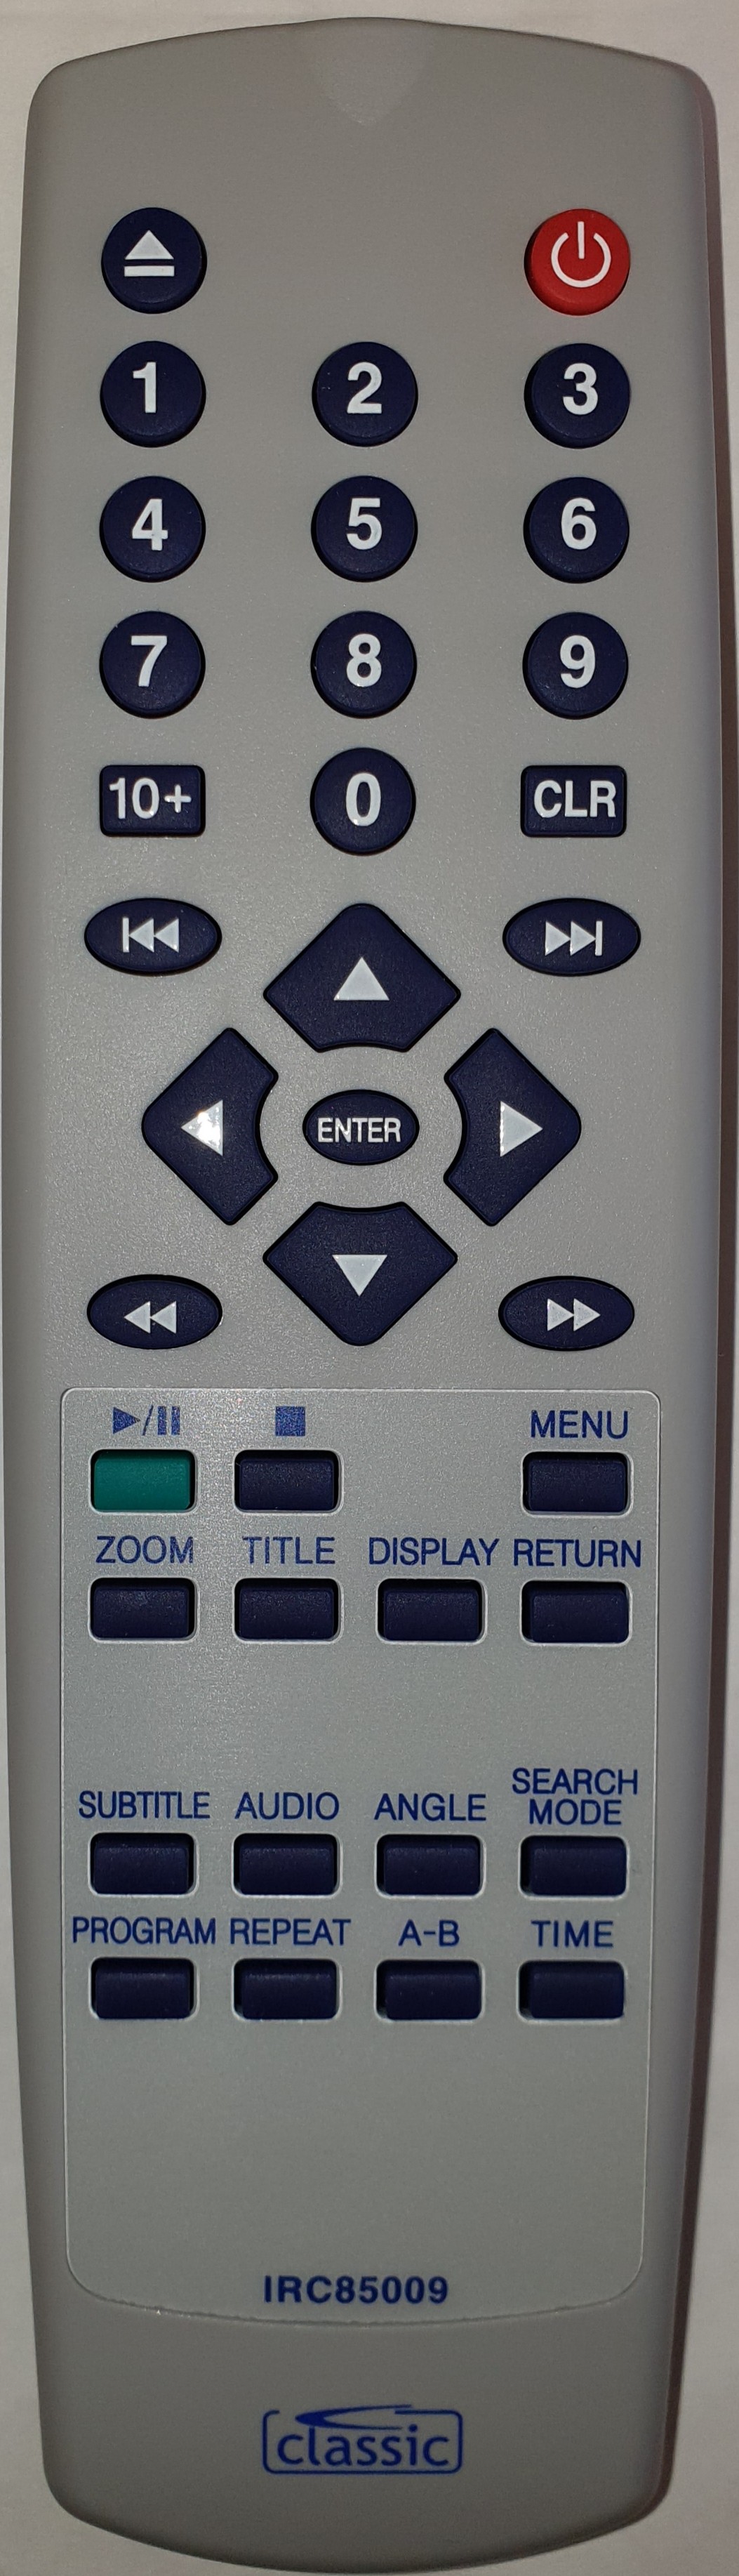 WHARFEDALE RC 2540 Remote Control